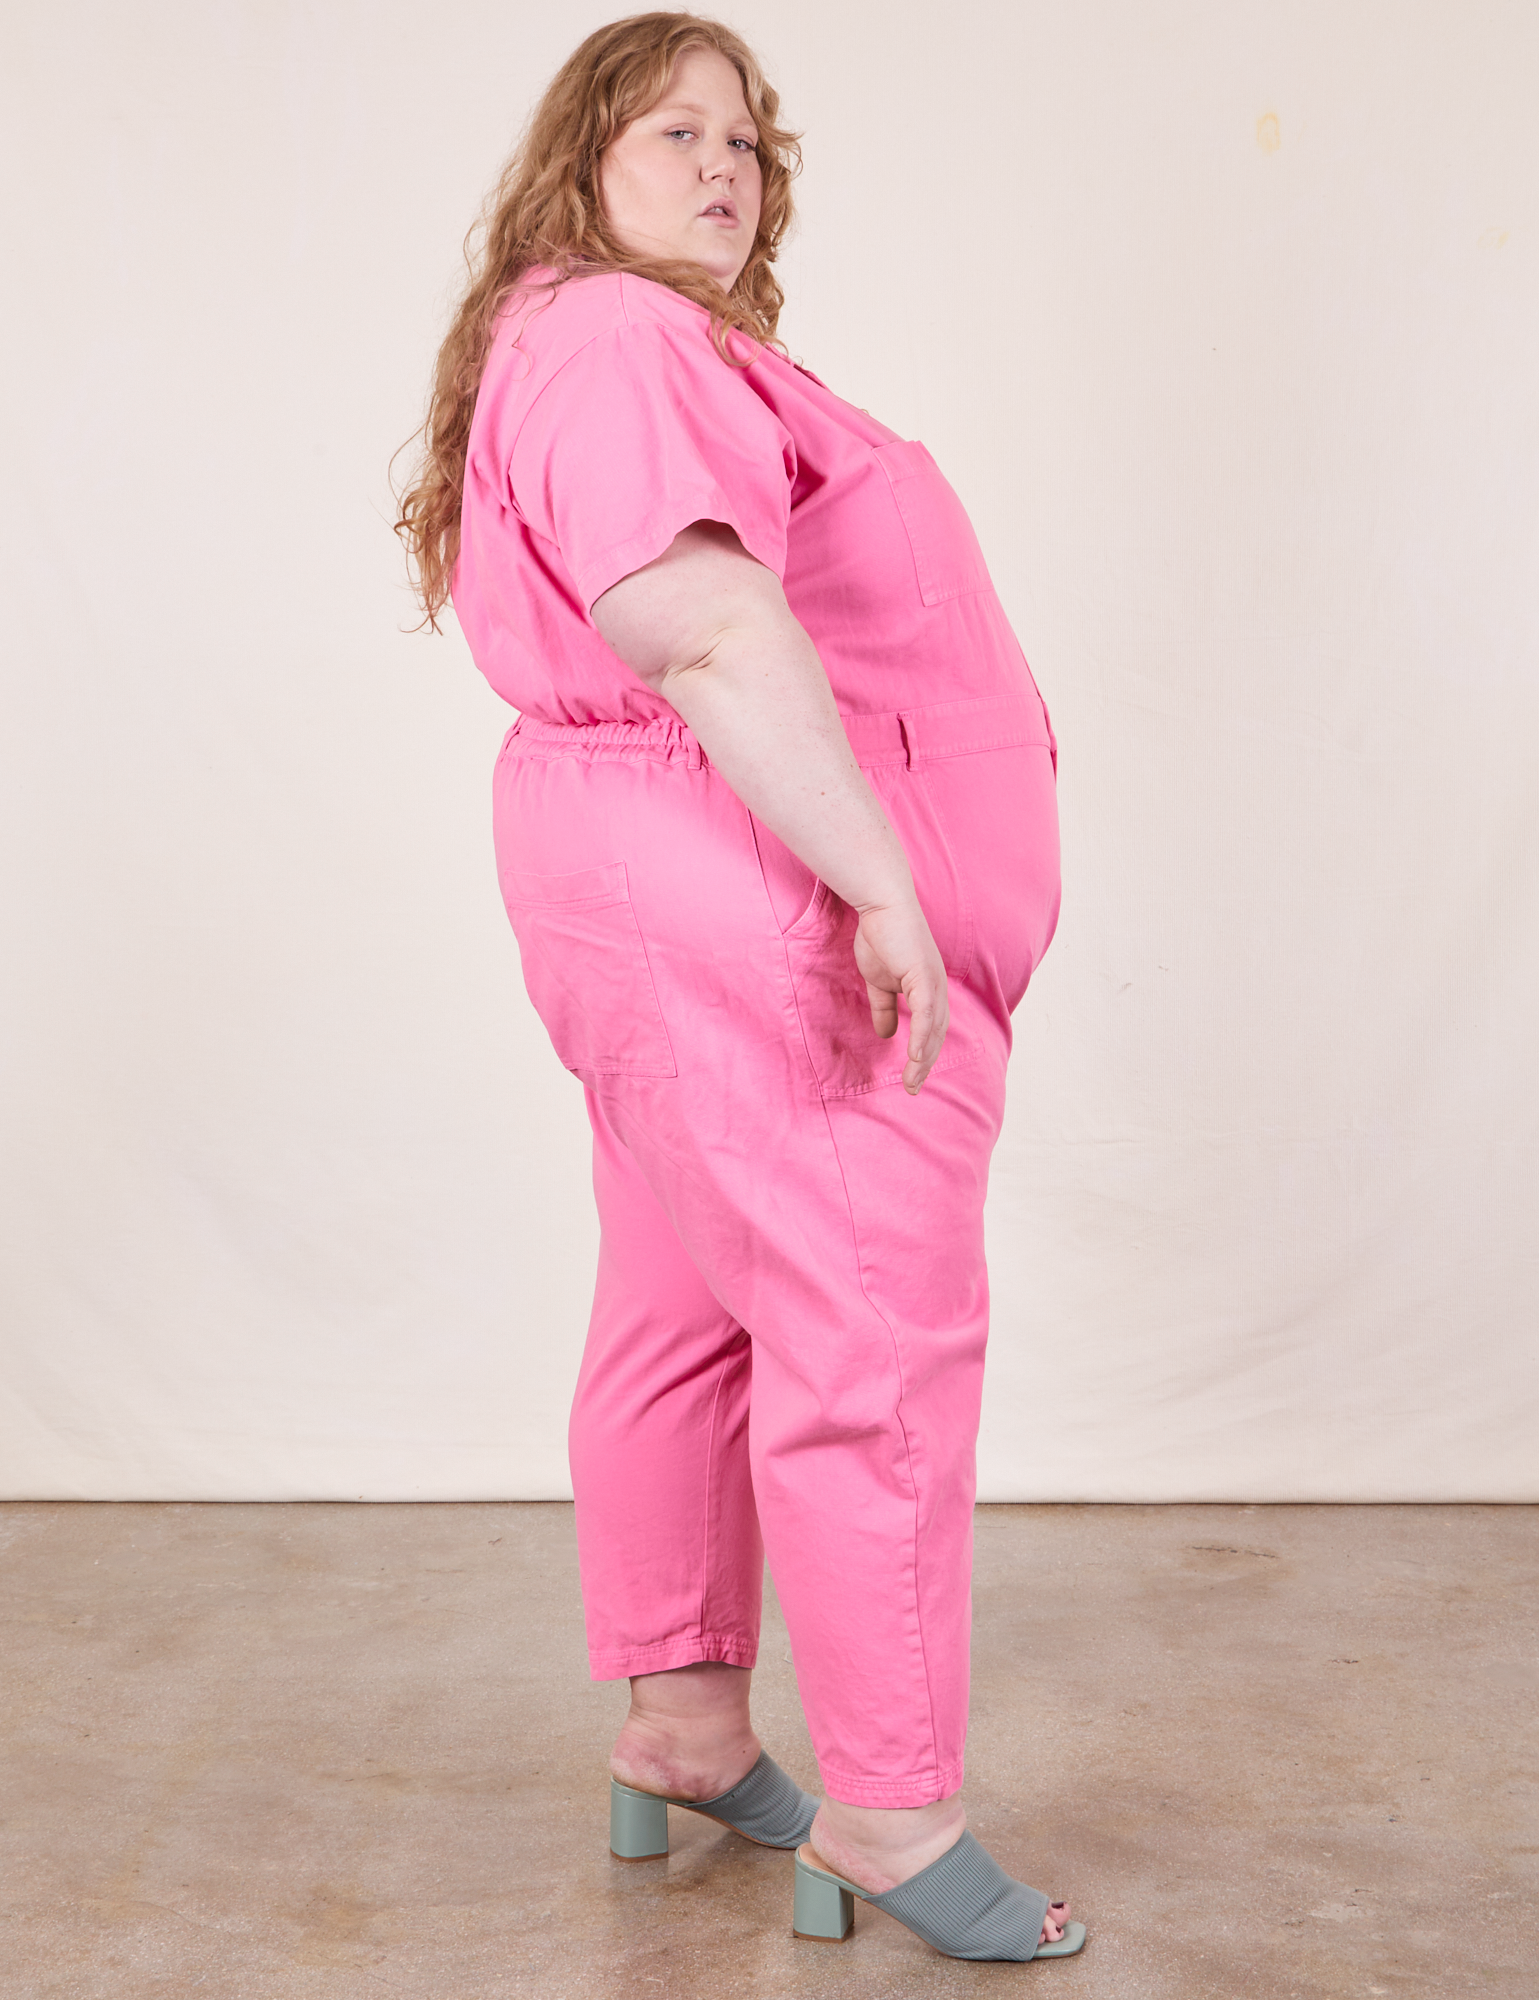 URMAGIC Summer Clearance Toddler Baby Girls Short Sleeve Pink Denim Overall  Jumpsuit with Belt - Walmart.com